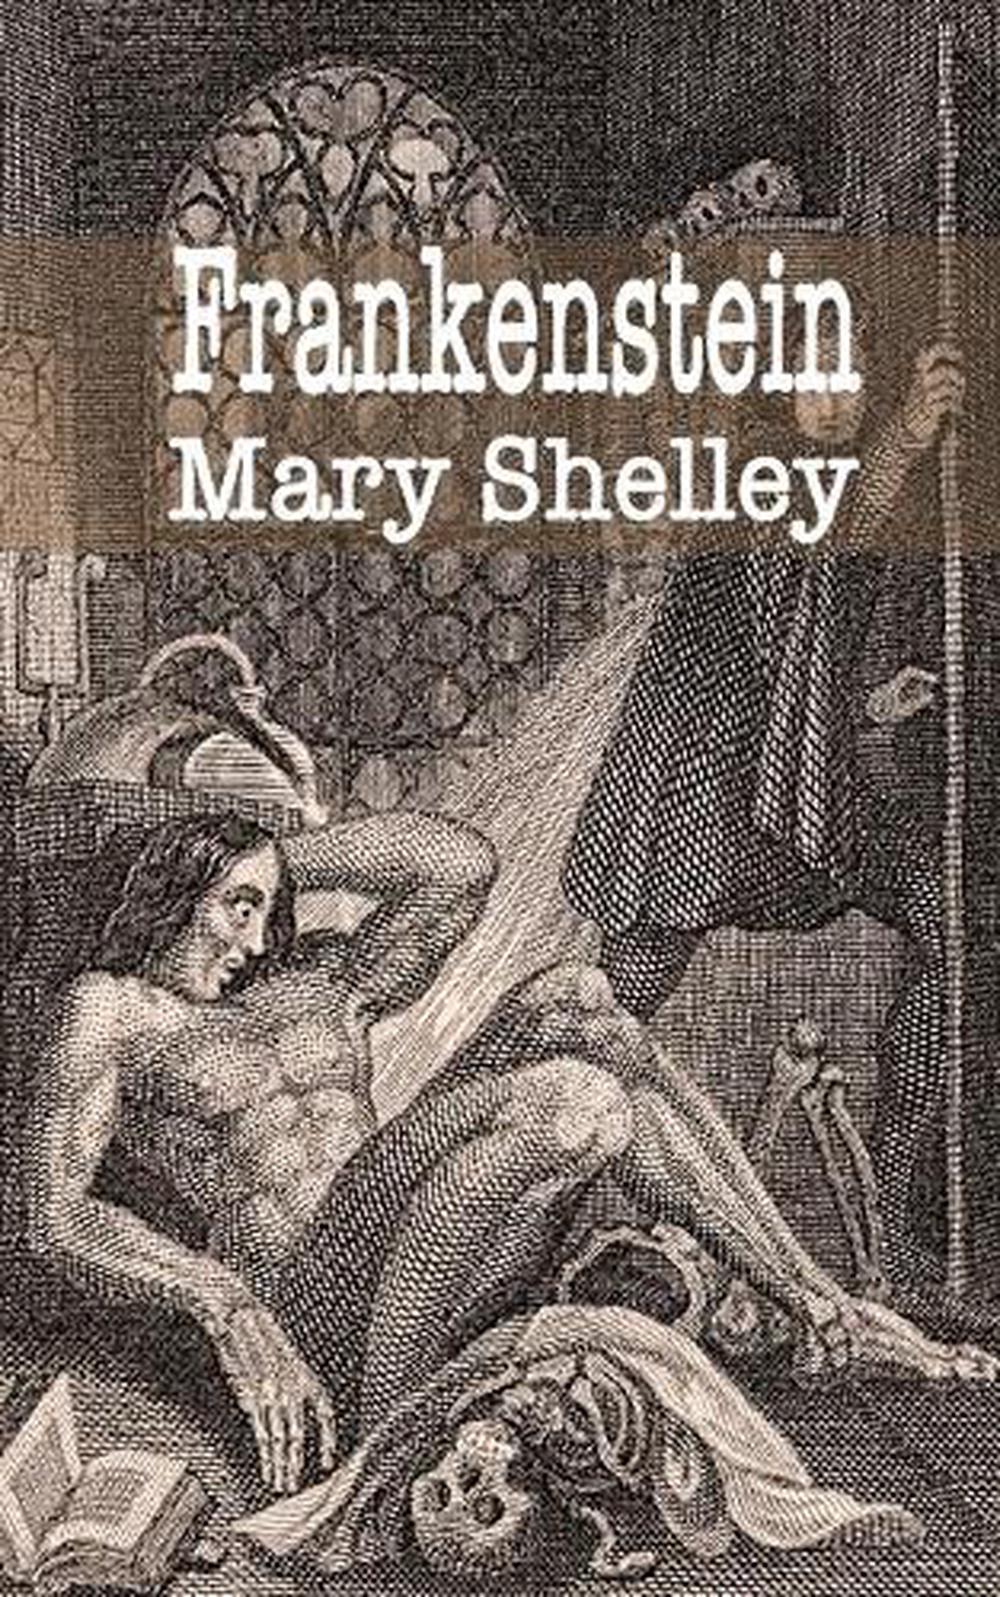 Frankenstein, or the Modern Prometheus. [By M. W. Shelley.] by Mary Wollstonecraft Shelley